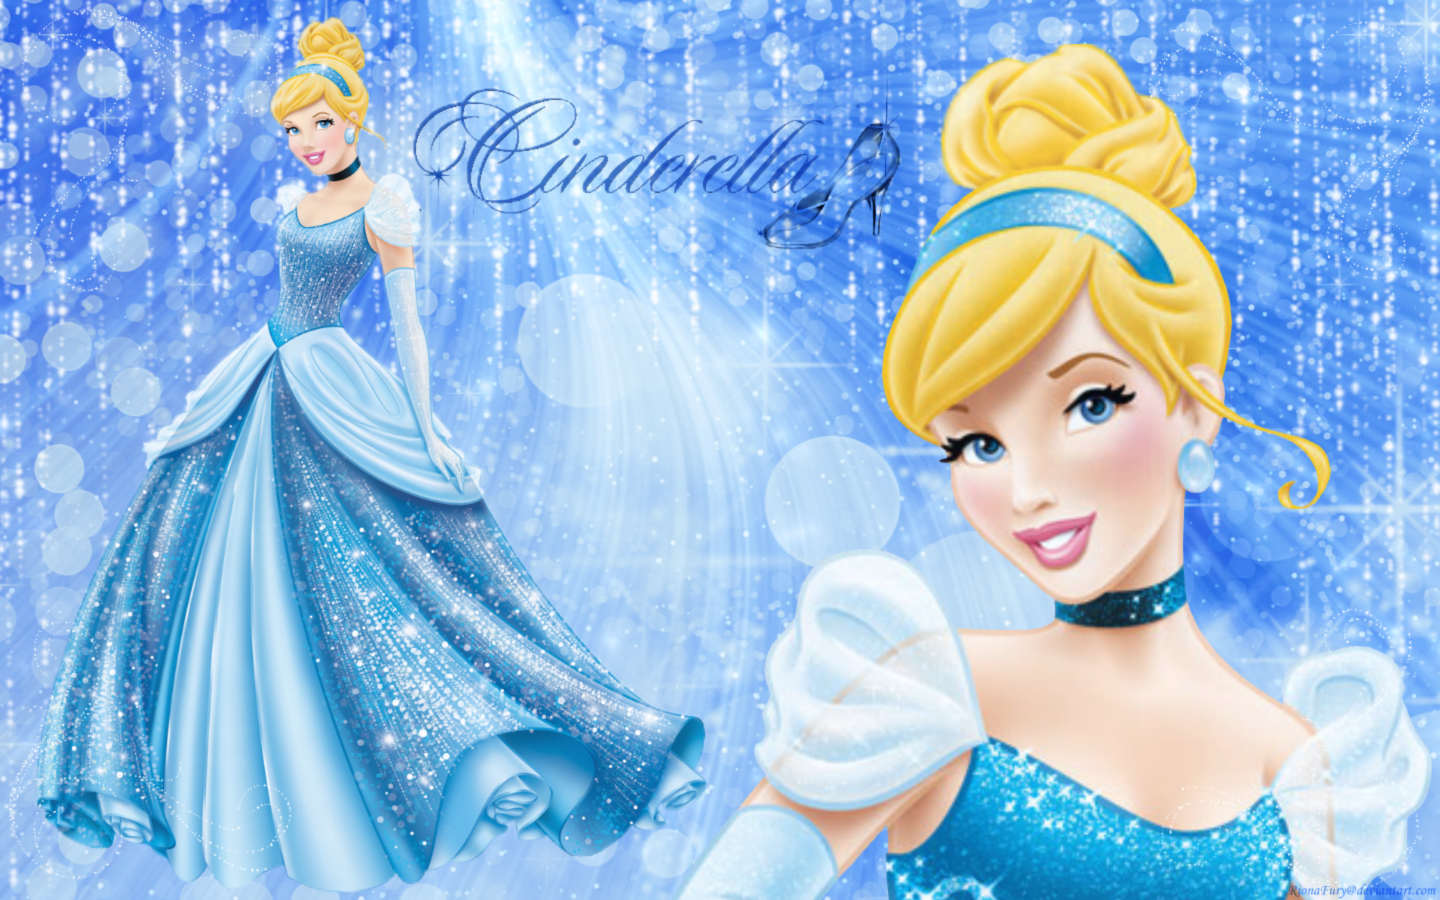 Cinderella's New look - Disney Princess Wallpaper (32949403) - Fanpop